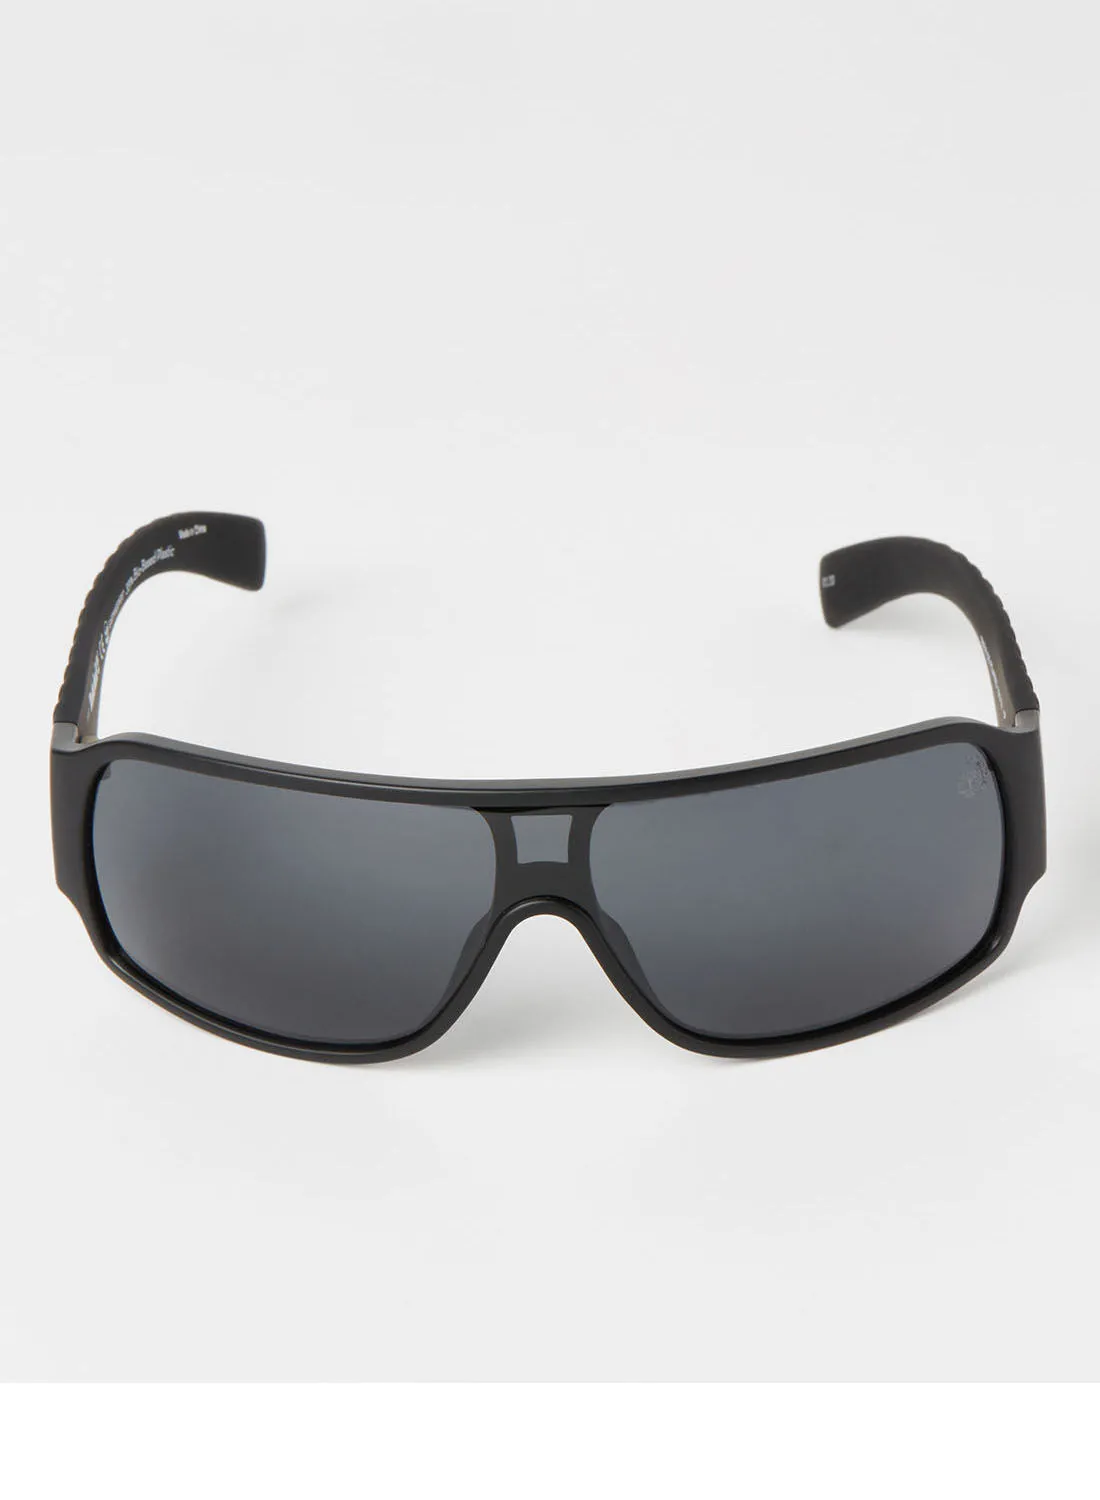 Timberland Men's Sunglasses - Lens Size: 54 mm